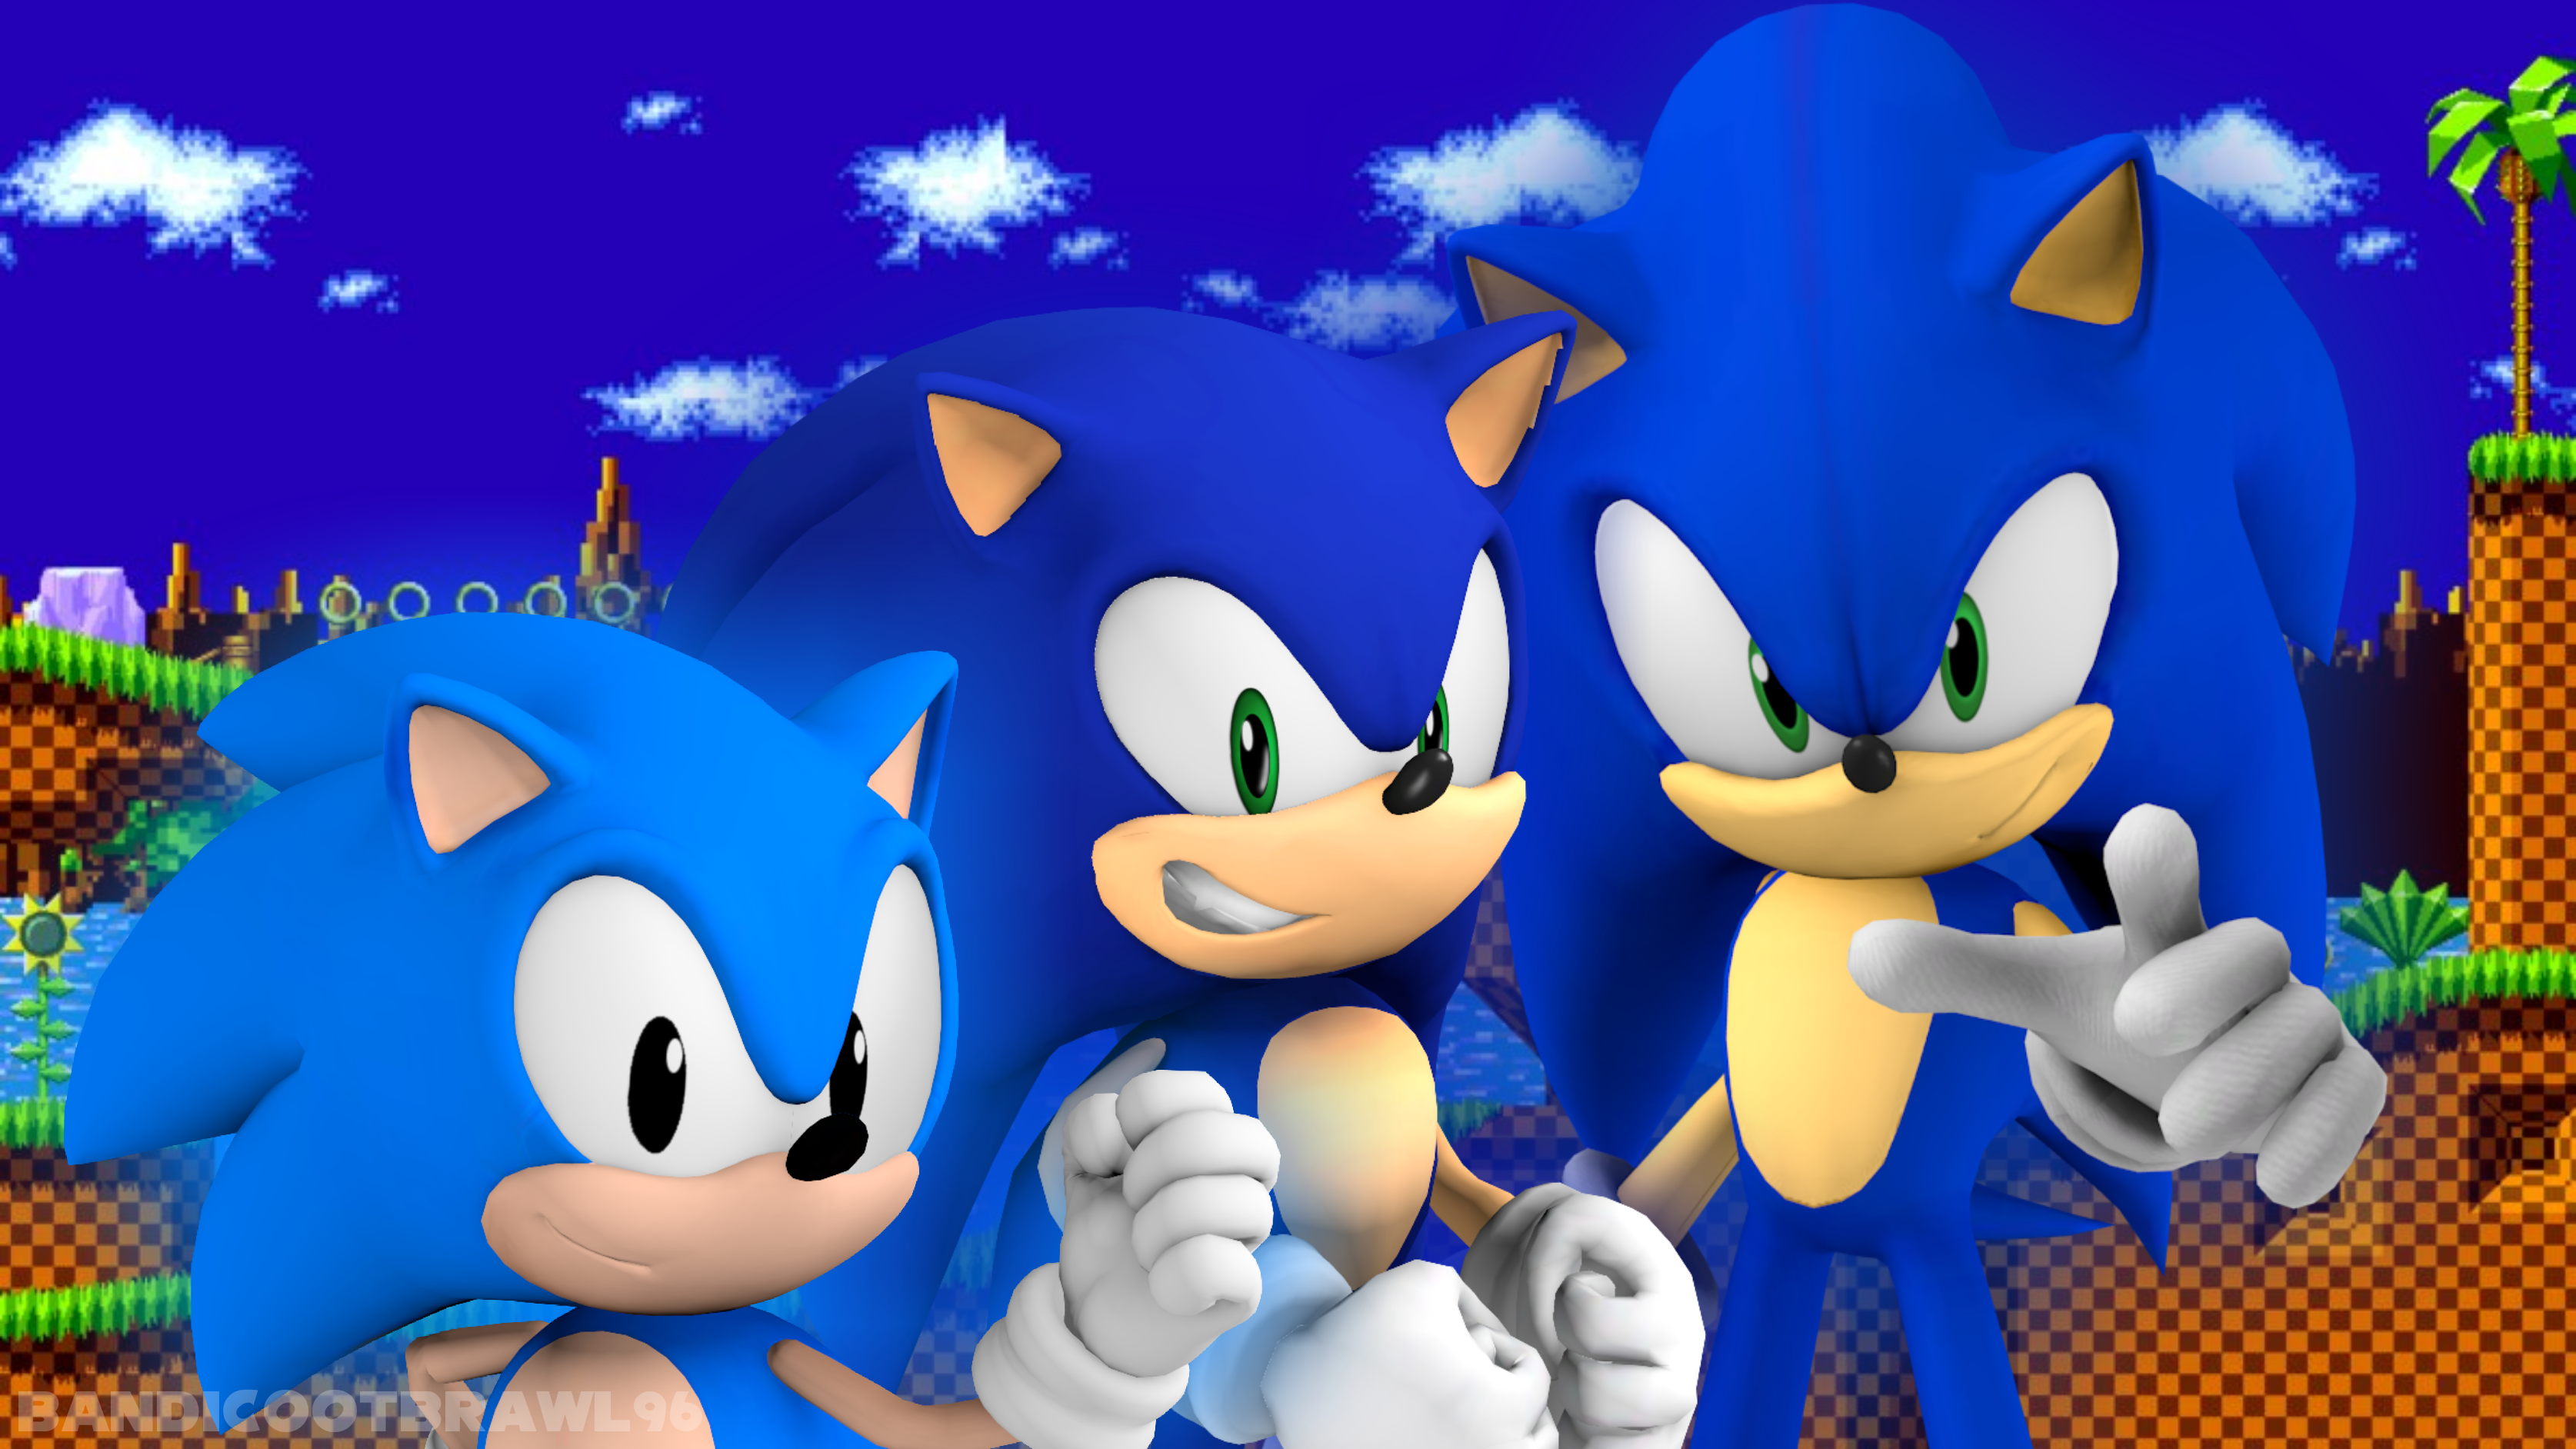 Classic Era Sonic the Hedgehog by bandicootbrawl96 on DeviantArt